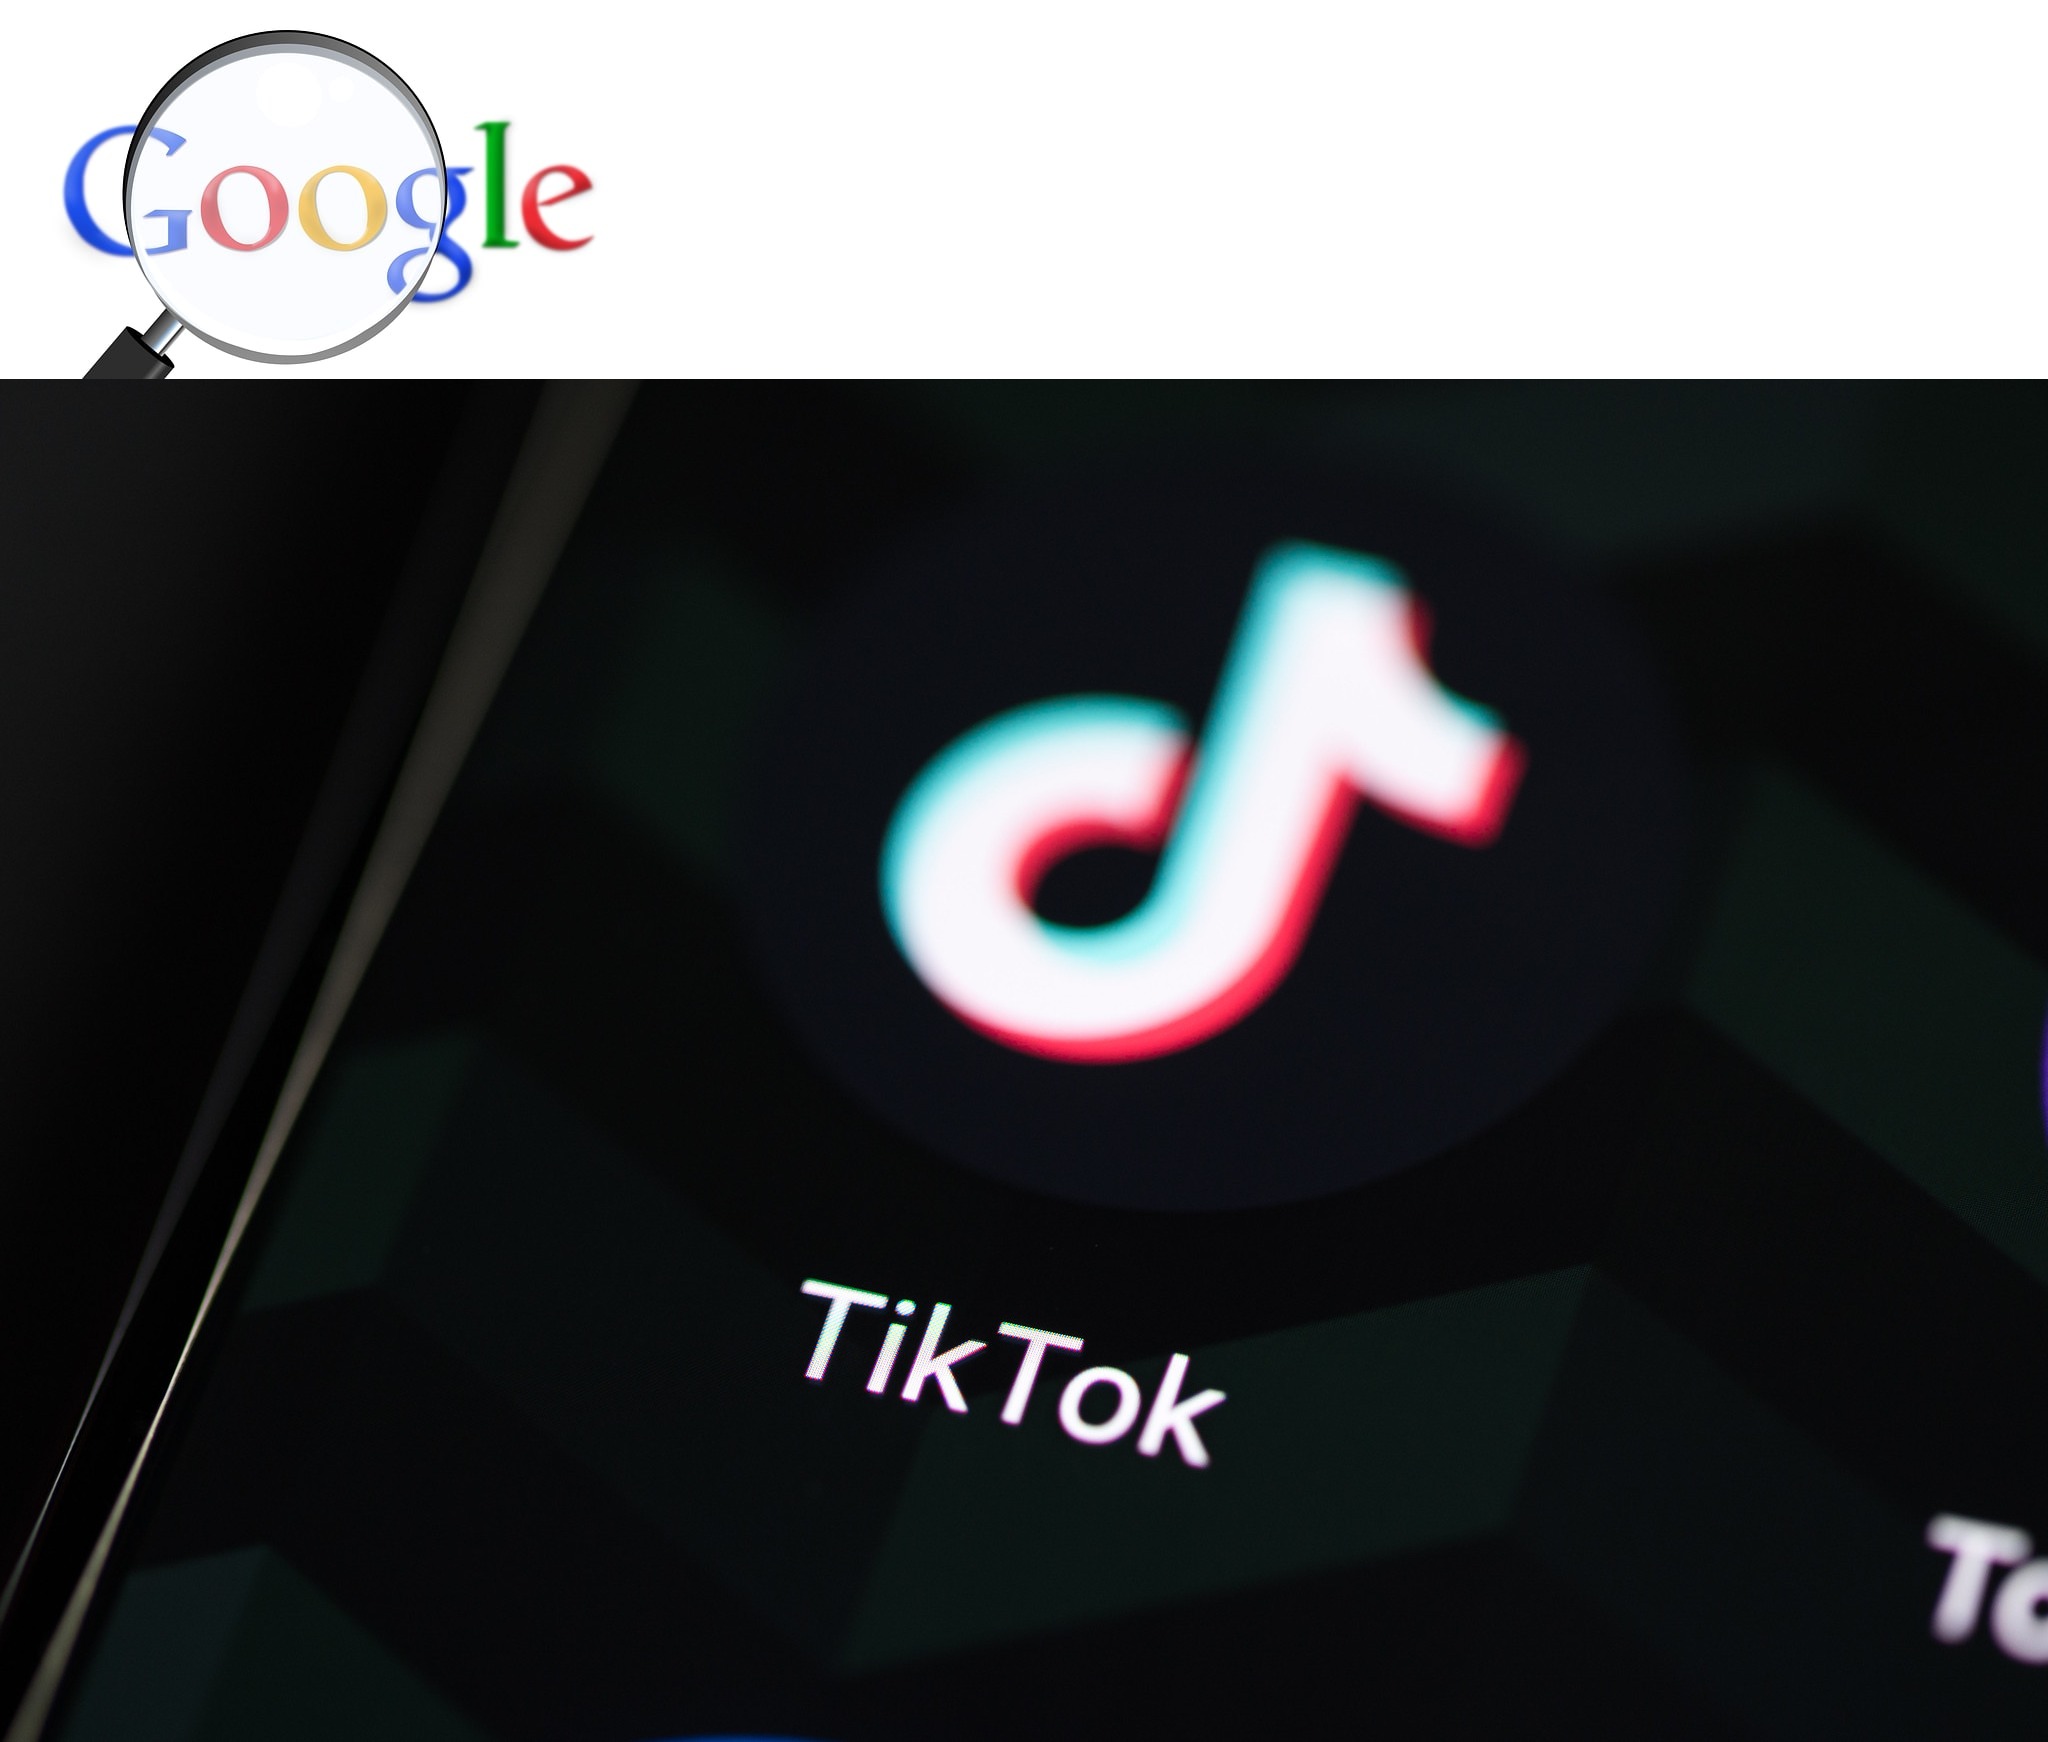 TikTok Surpasses Google As The Most Popular Domain